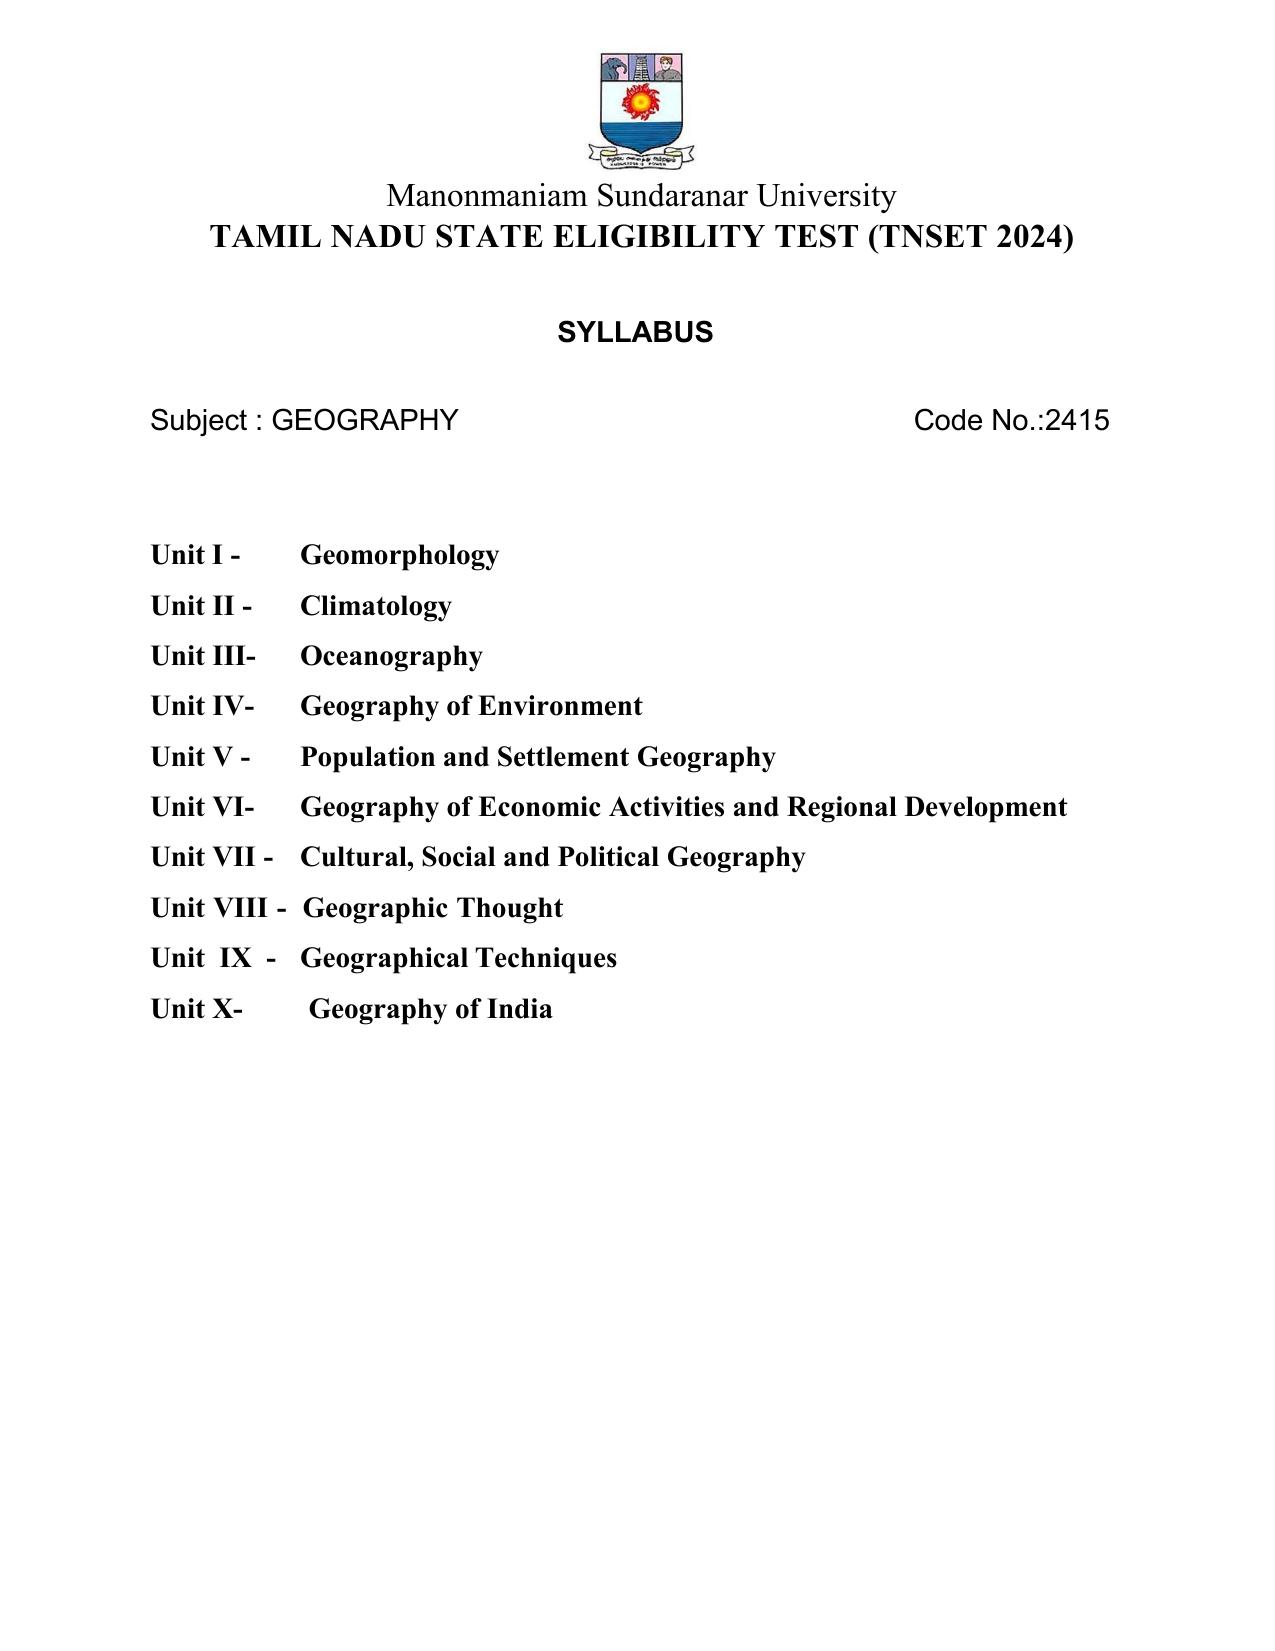 TNSET Syllabus - Geography - Page 1